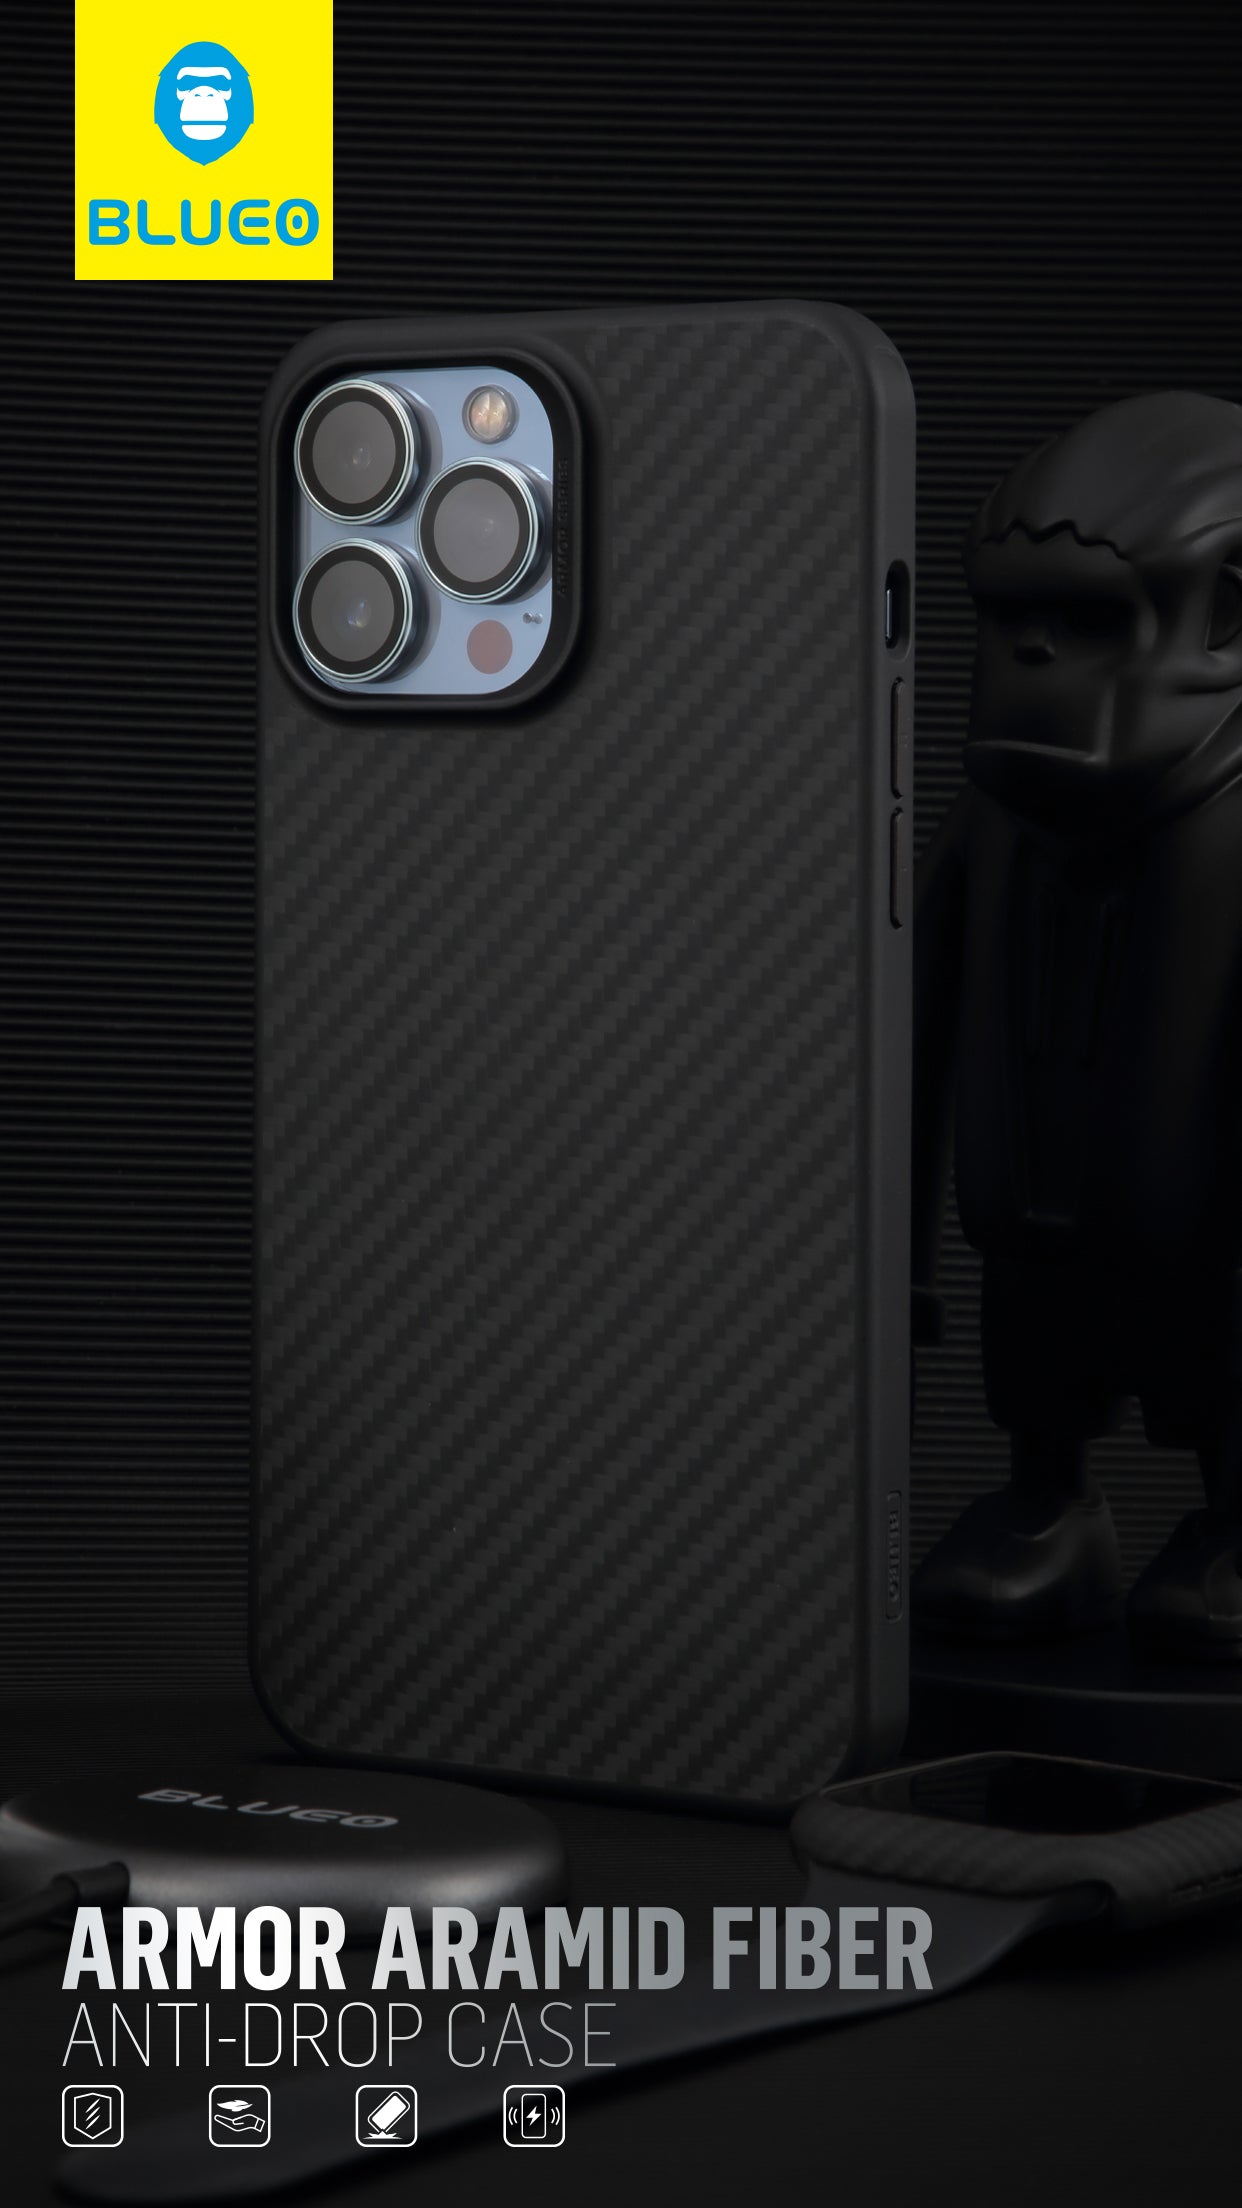 BlueO Armor Aramid Fiber Anti-Drop Case for iPhone